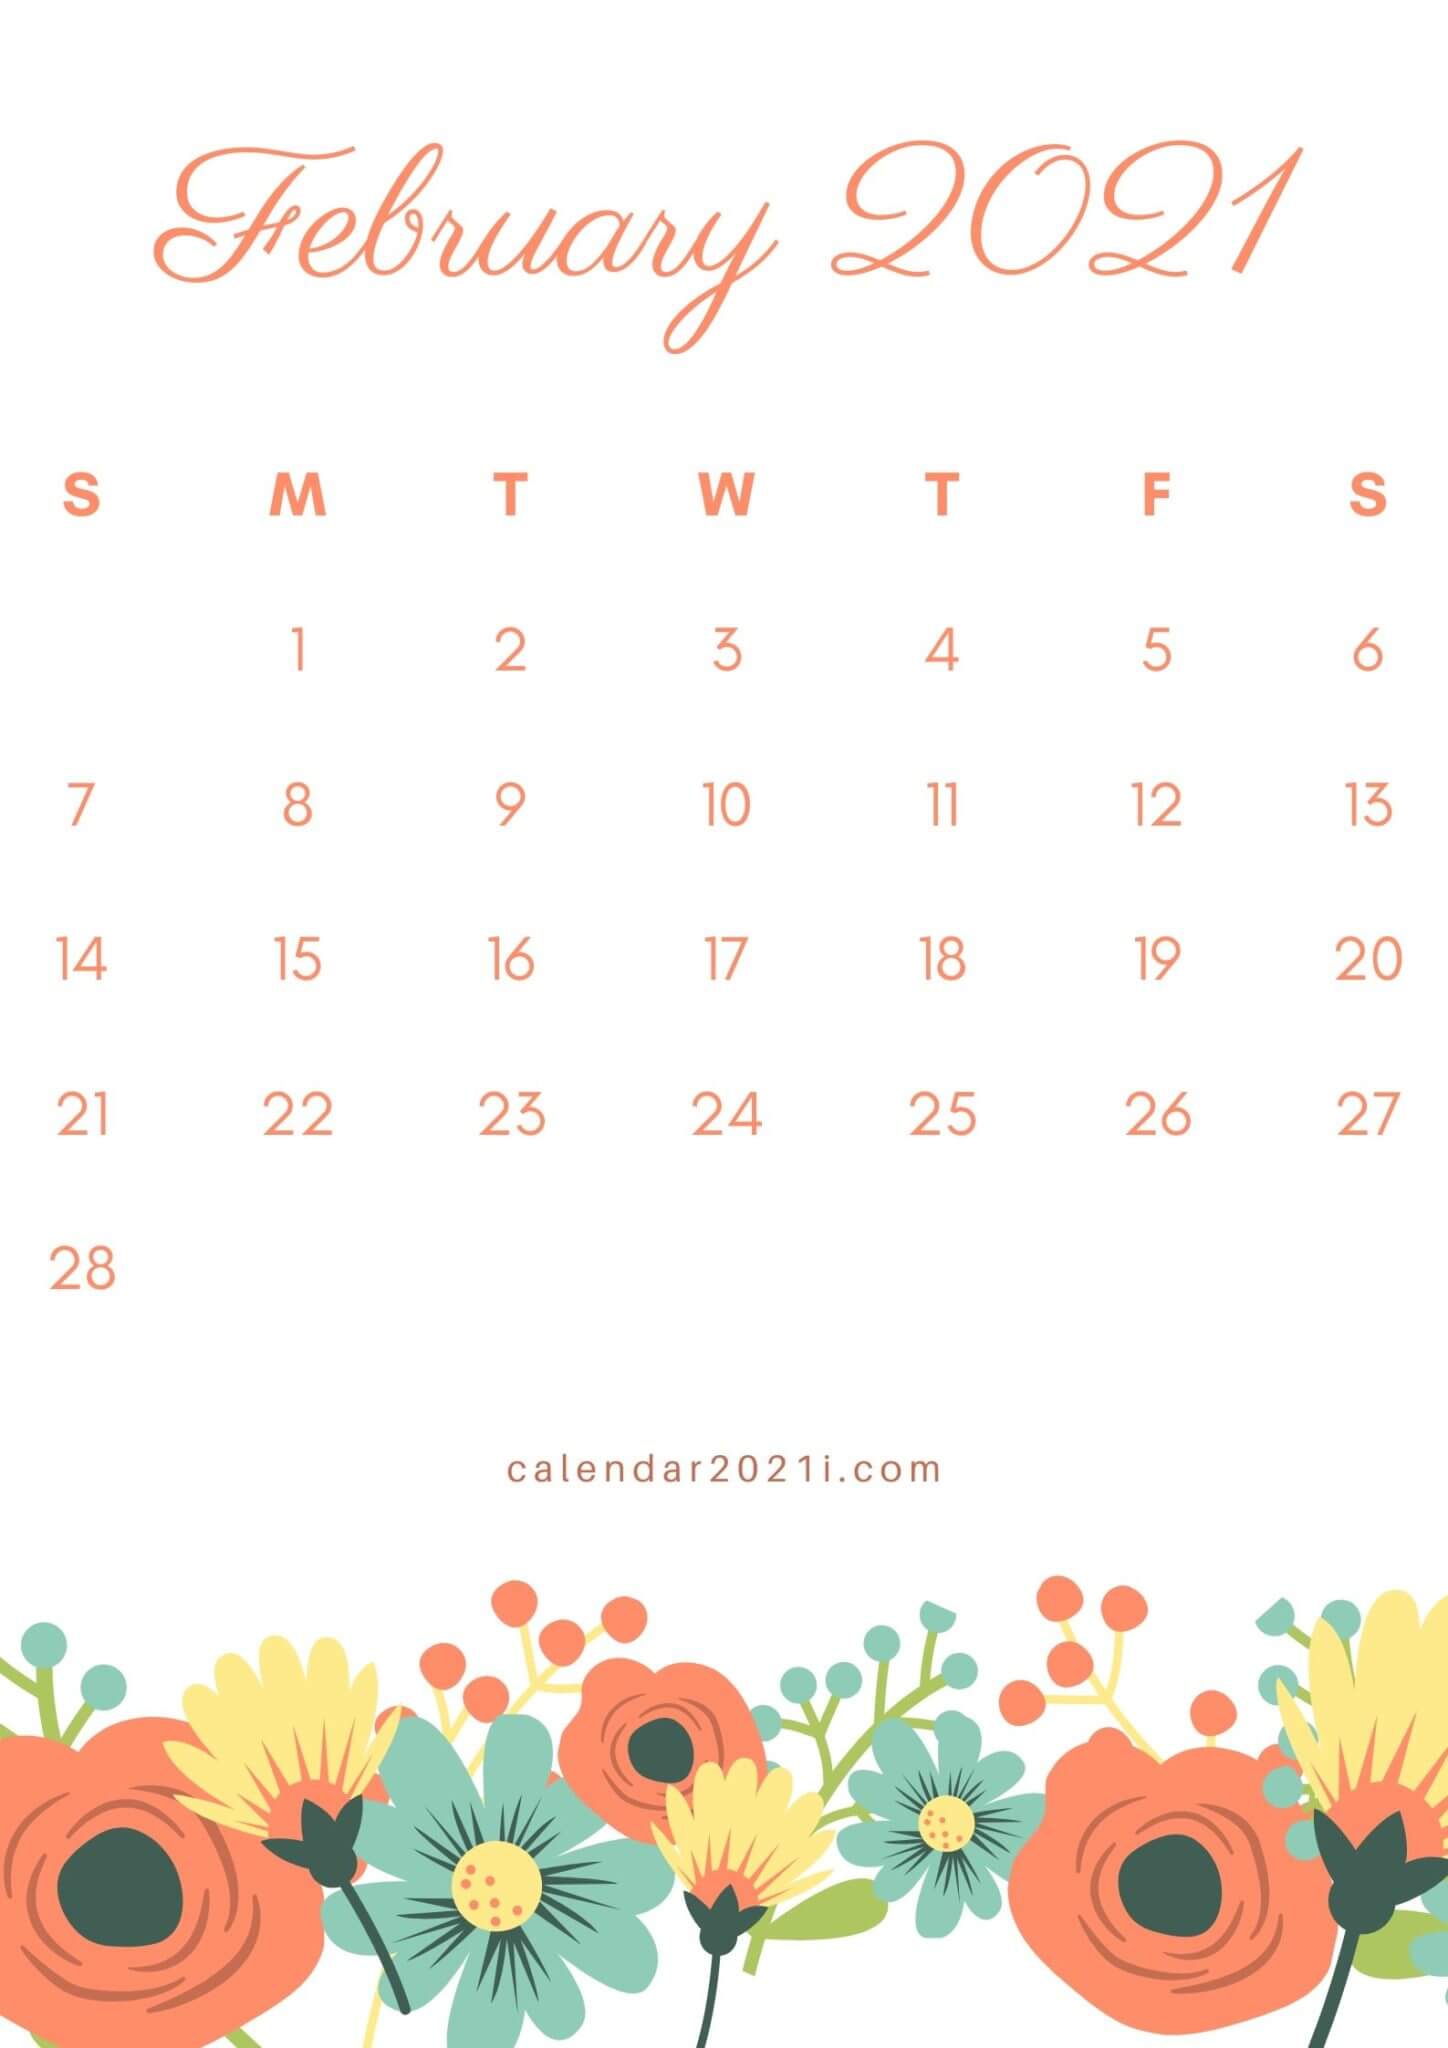 February 2021 iPhone Calendar Wallpaper